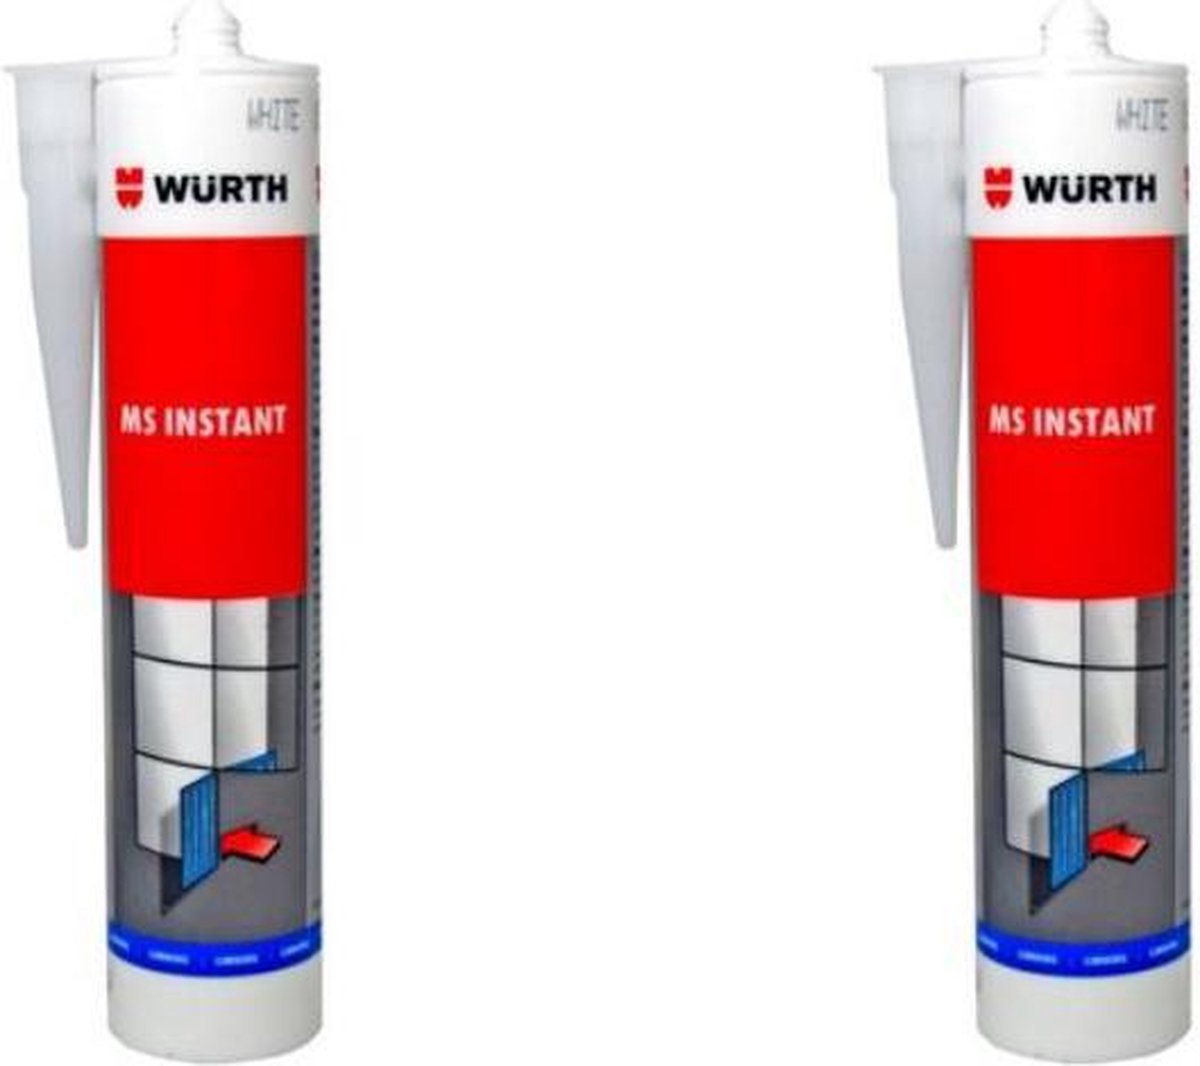 Wurth, kit MS Instant, High Tack, Wit, 580 ml, paquet de 2 | bol.com